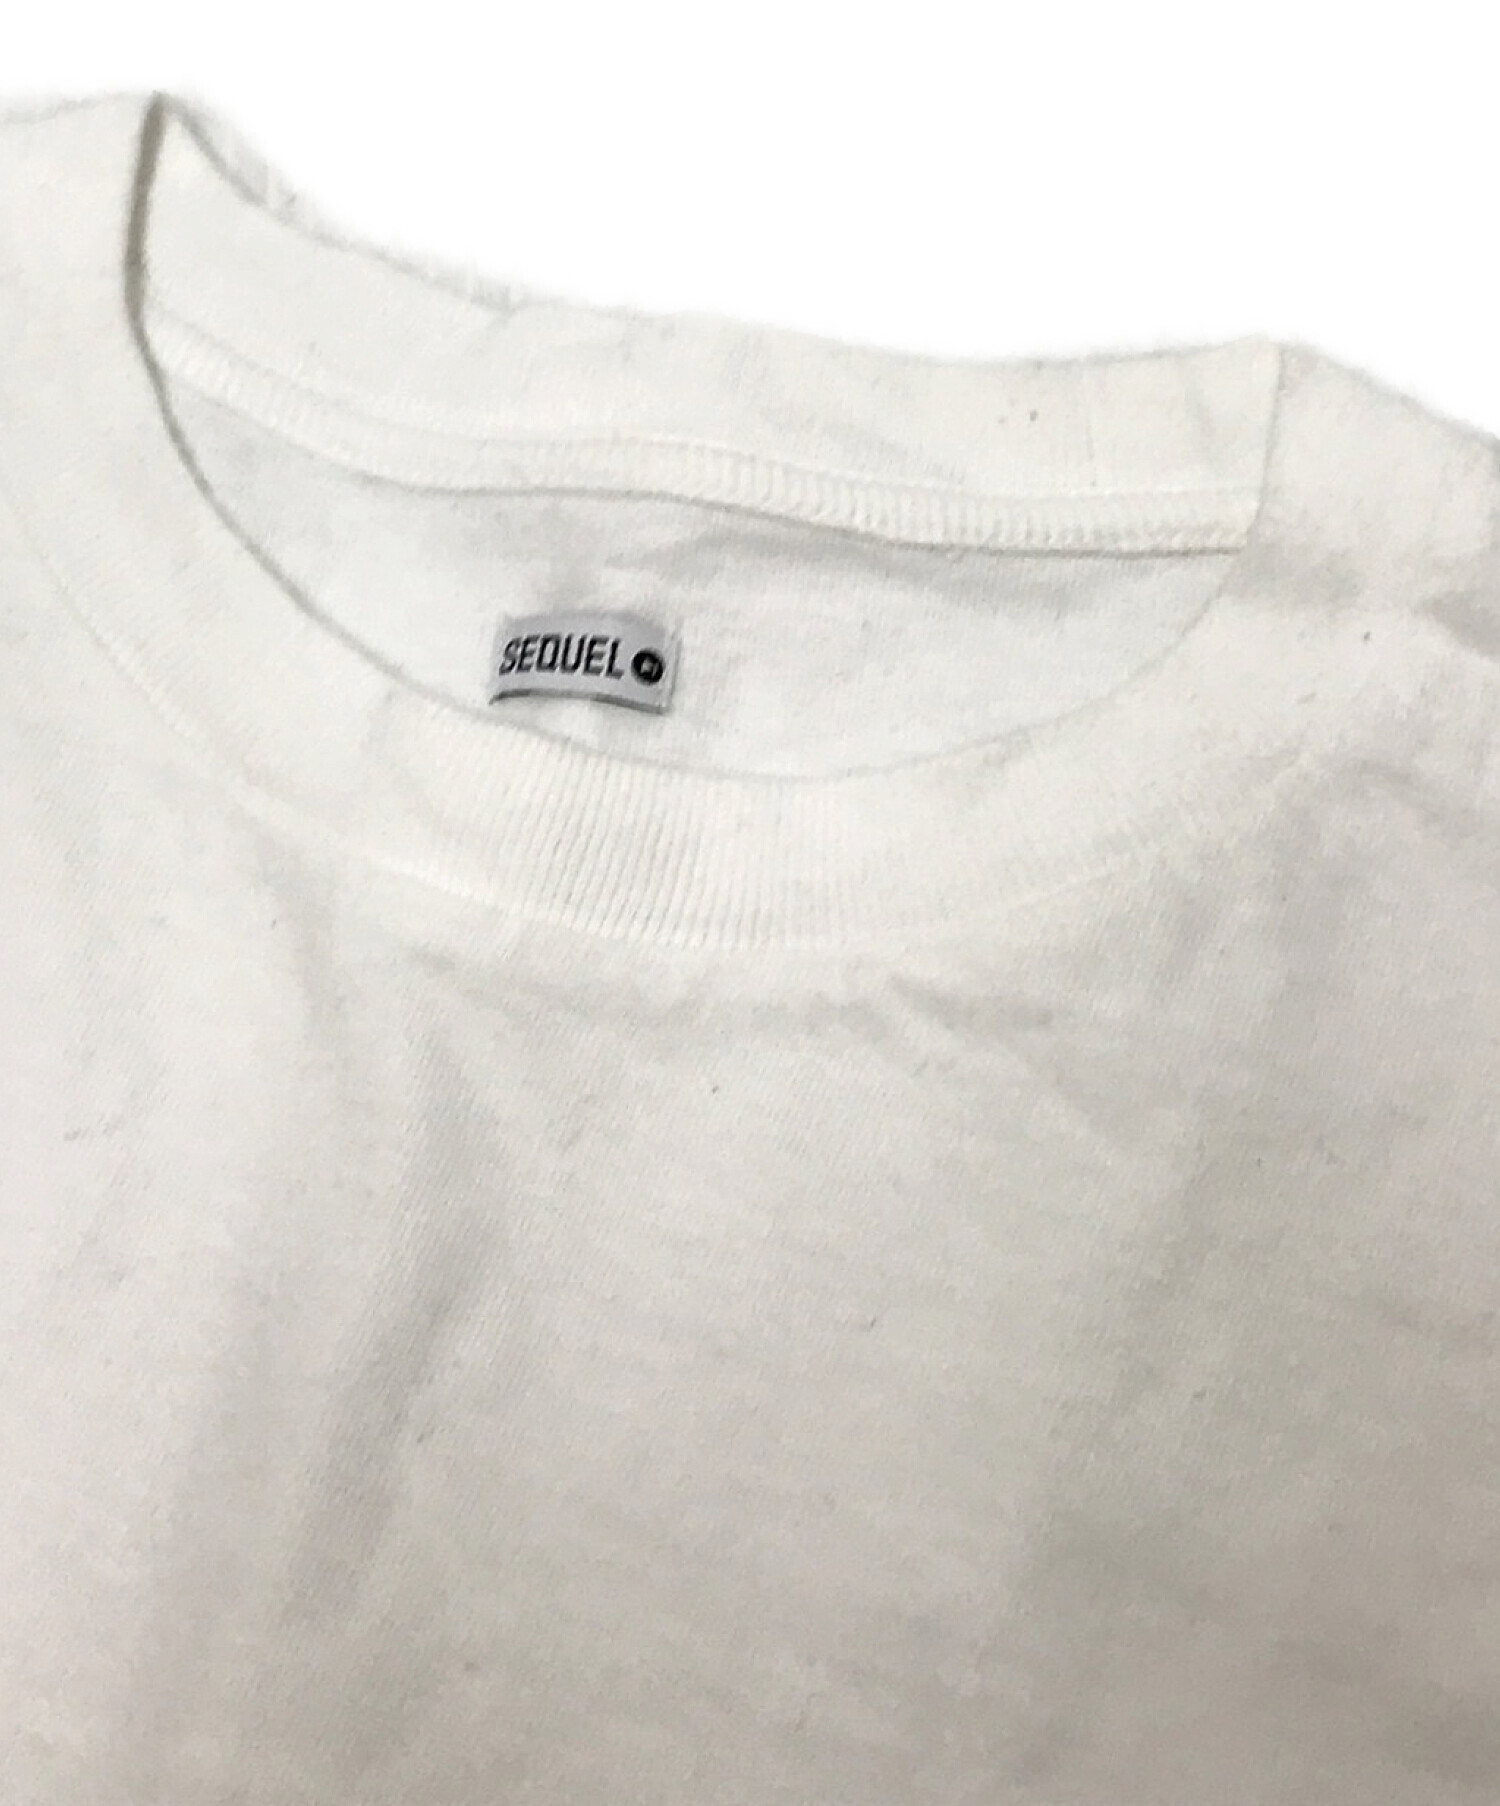 SEQUEL (シークエル) FRAGMENT DESIGN (フラグメントデザイン) プリントTシャツ ホワイト サイズ:L